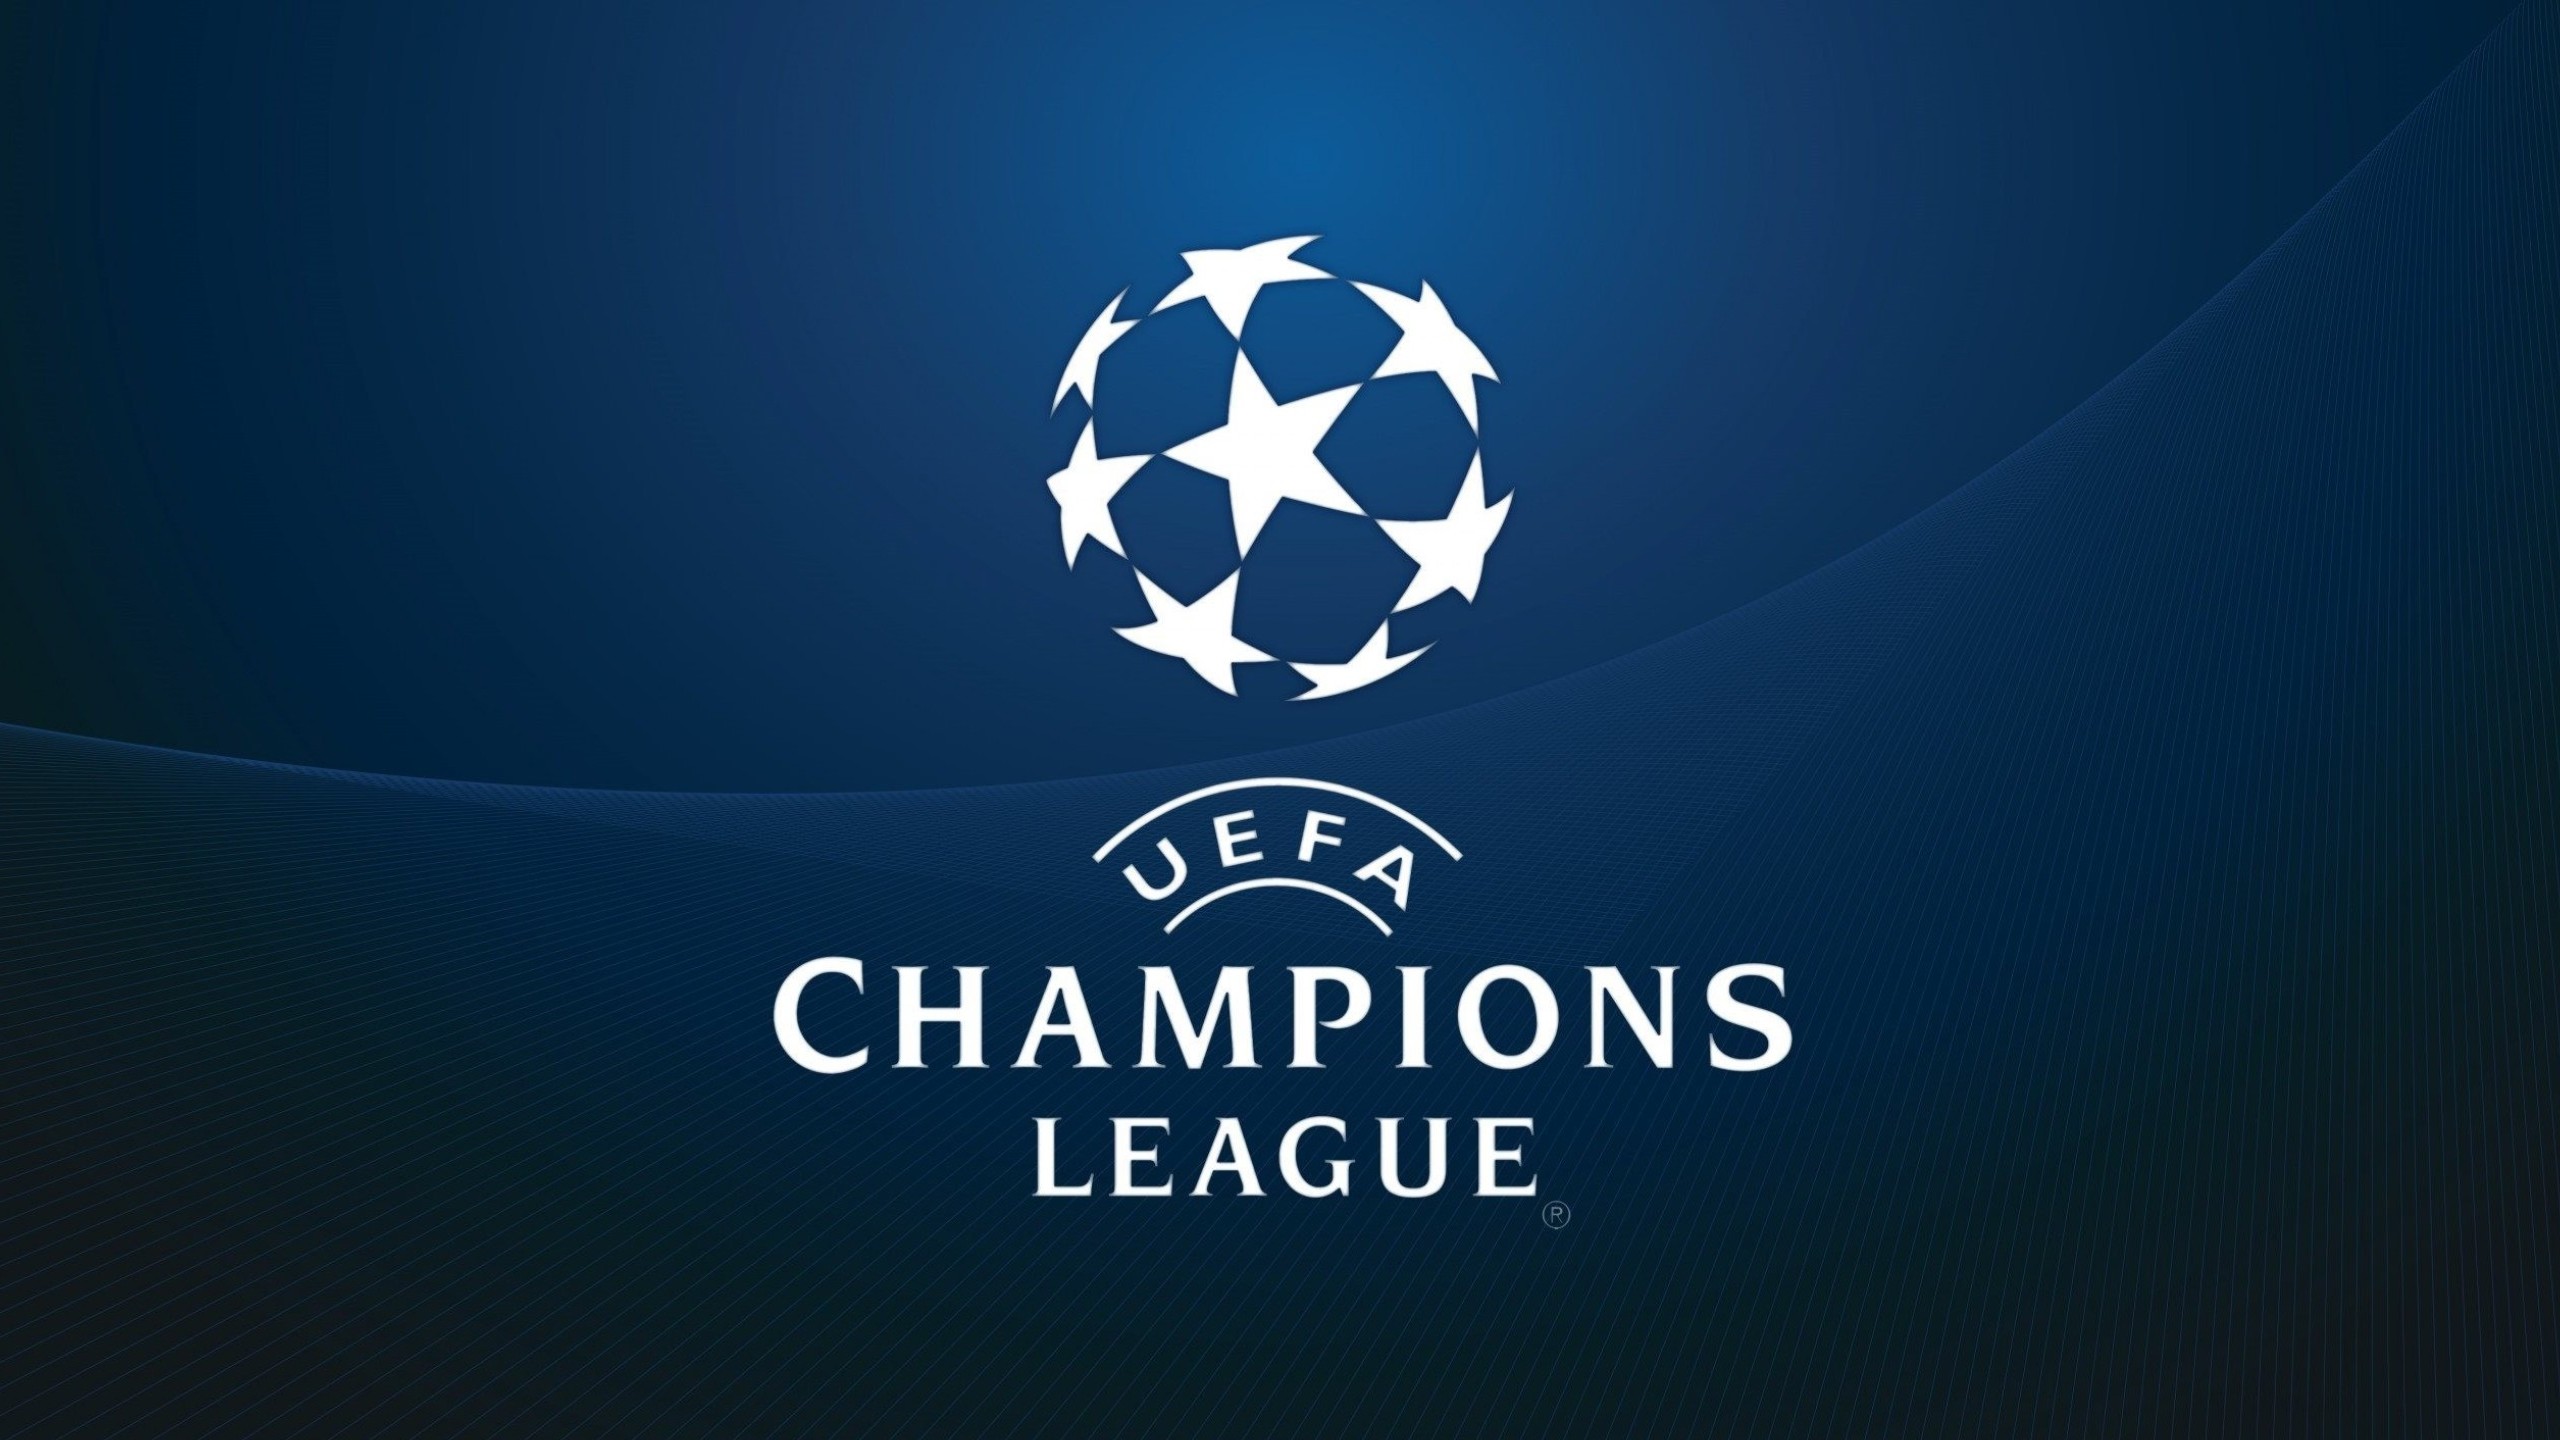 Uefa Champions League HD Wallpaper Background Image